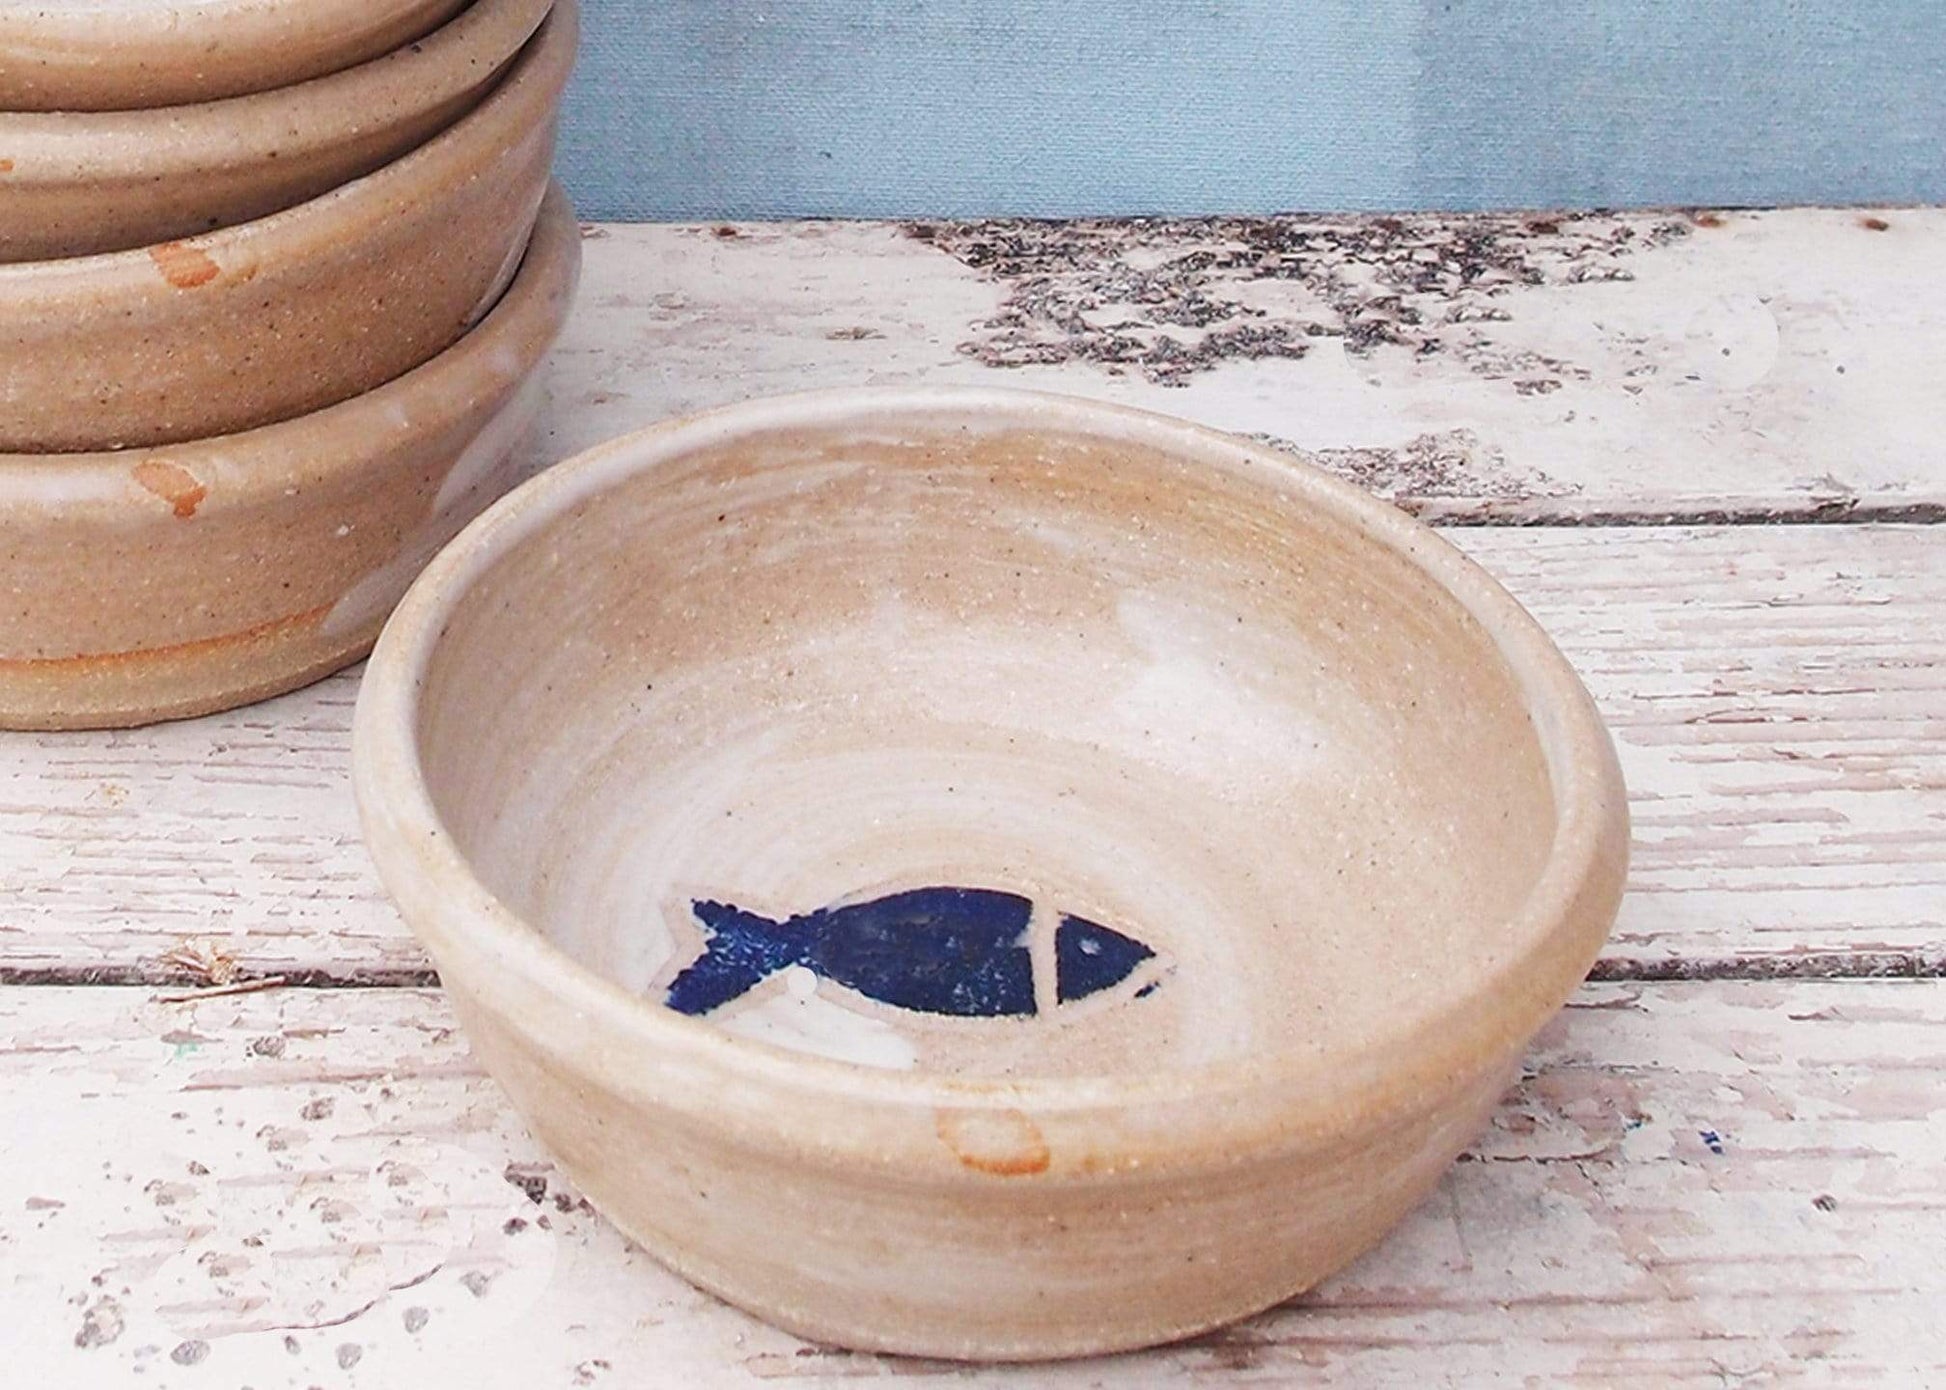 SabineSchmidtPottery Ceramic Cat Bowl in White/Blue, Cute Cat Food Bowl With Fish Design Devon Ceramics